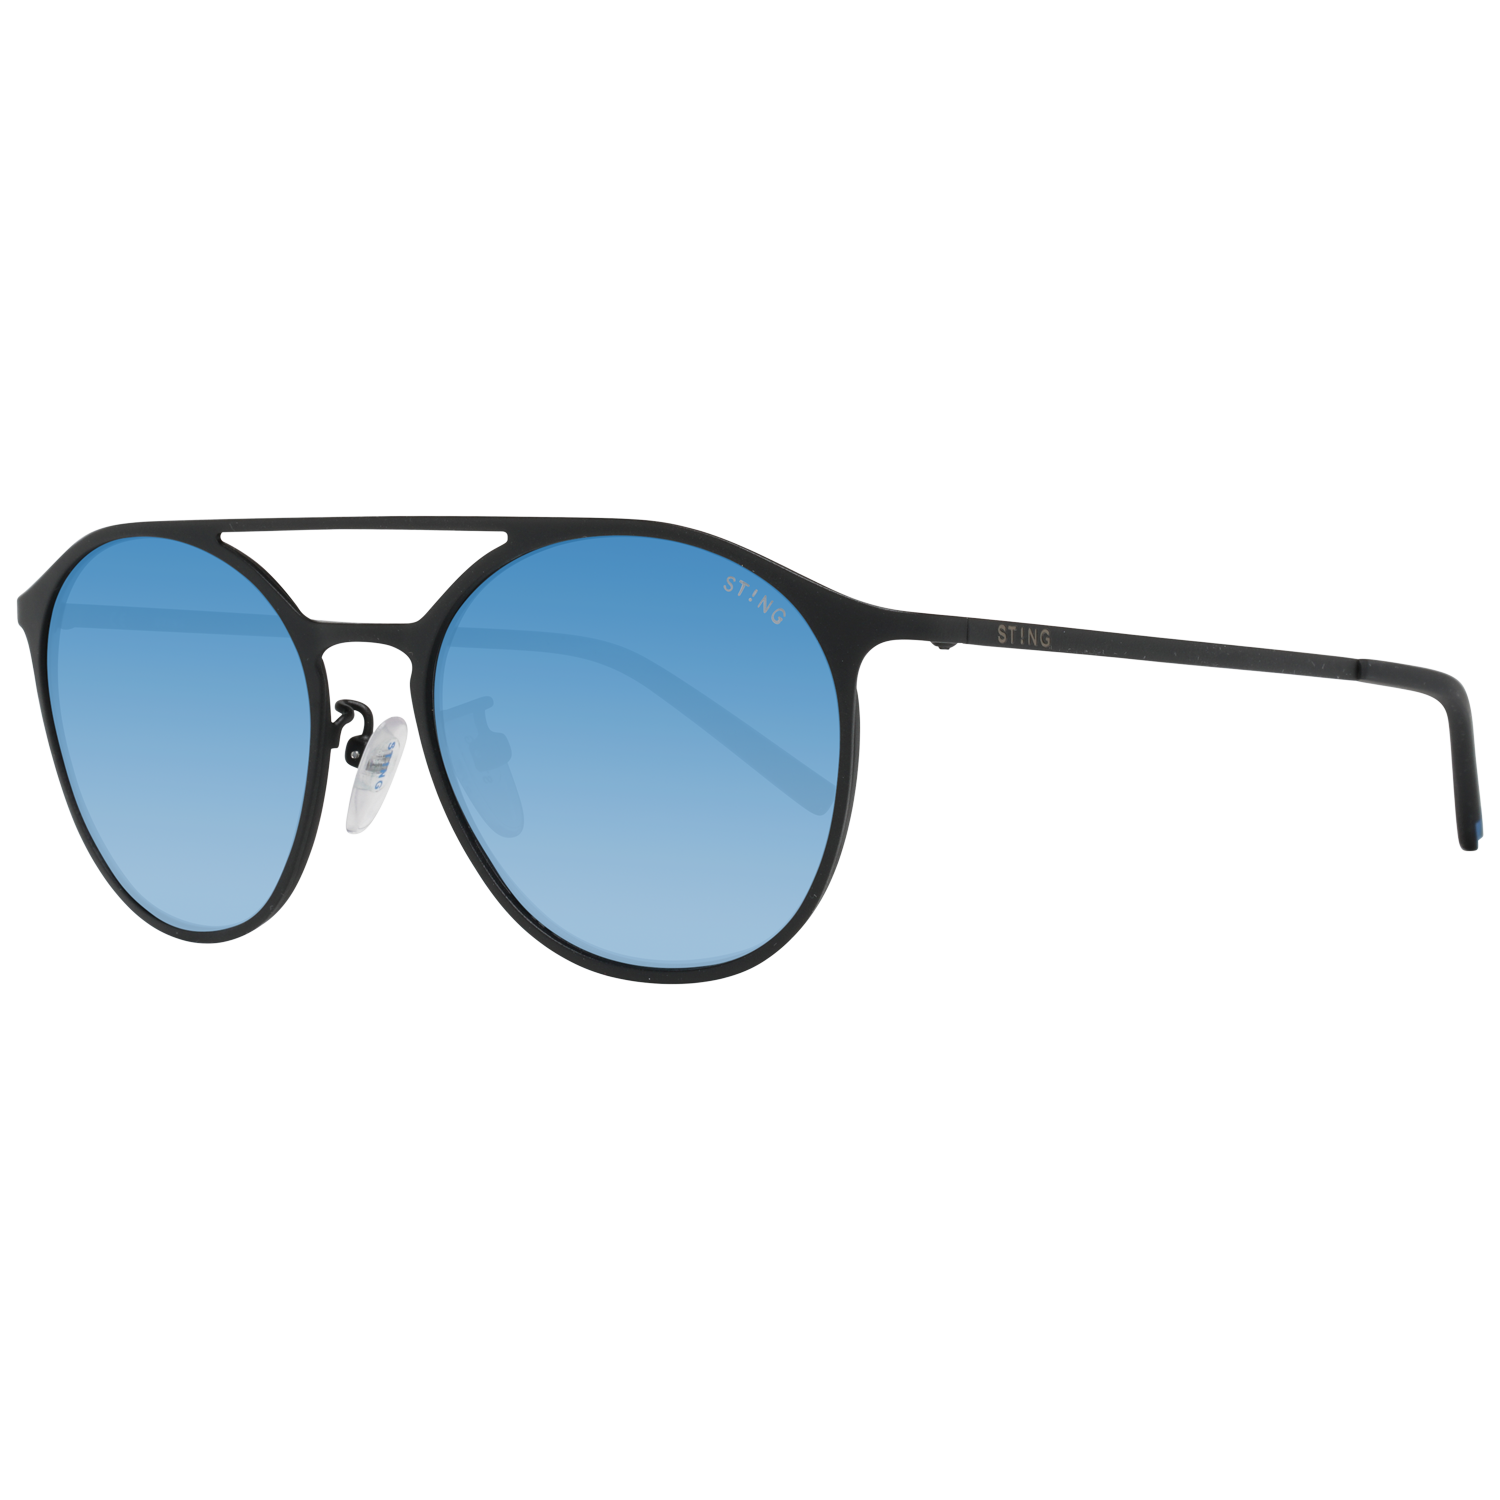 Sting Sunglasses Sting Sunglasses SS4902 6AAX 52 Eyeglasses Eyewear UK USA Australia 